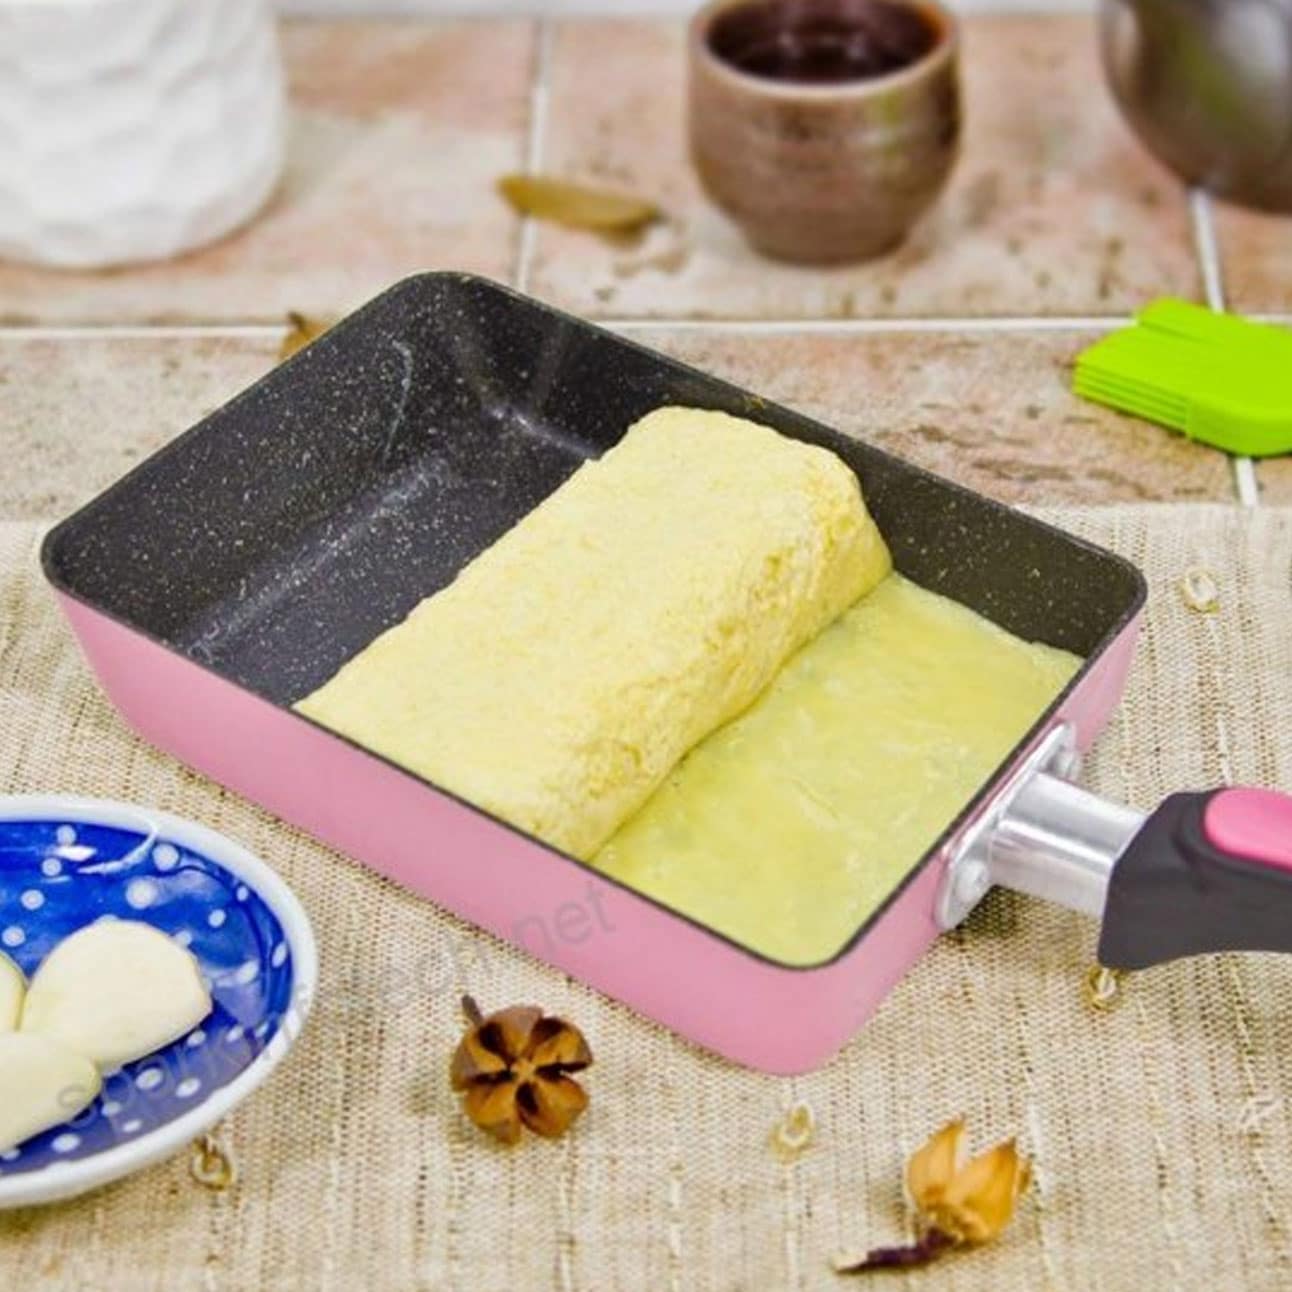 https://shutupandtakemyyen.com/wp-content/uploads/2019/06/Tamagoyaki-Japanese-Omelette-Pan-Copy.jpg